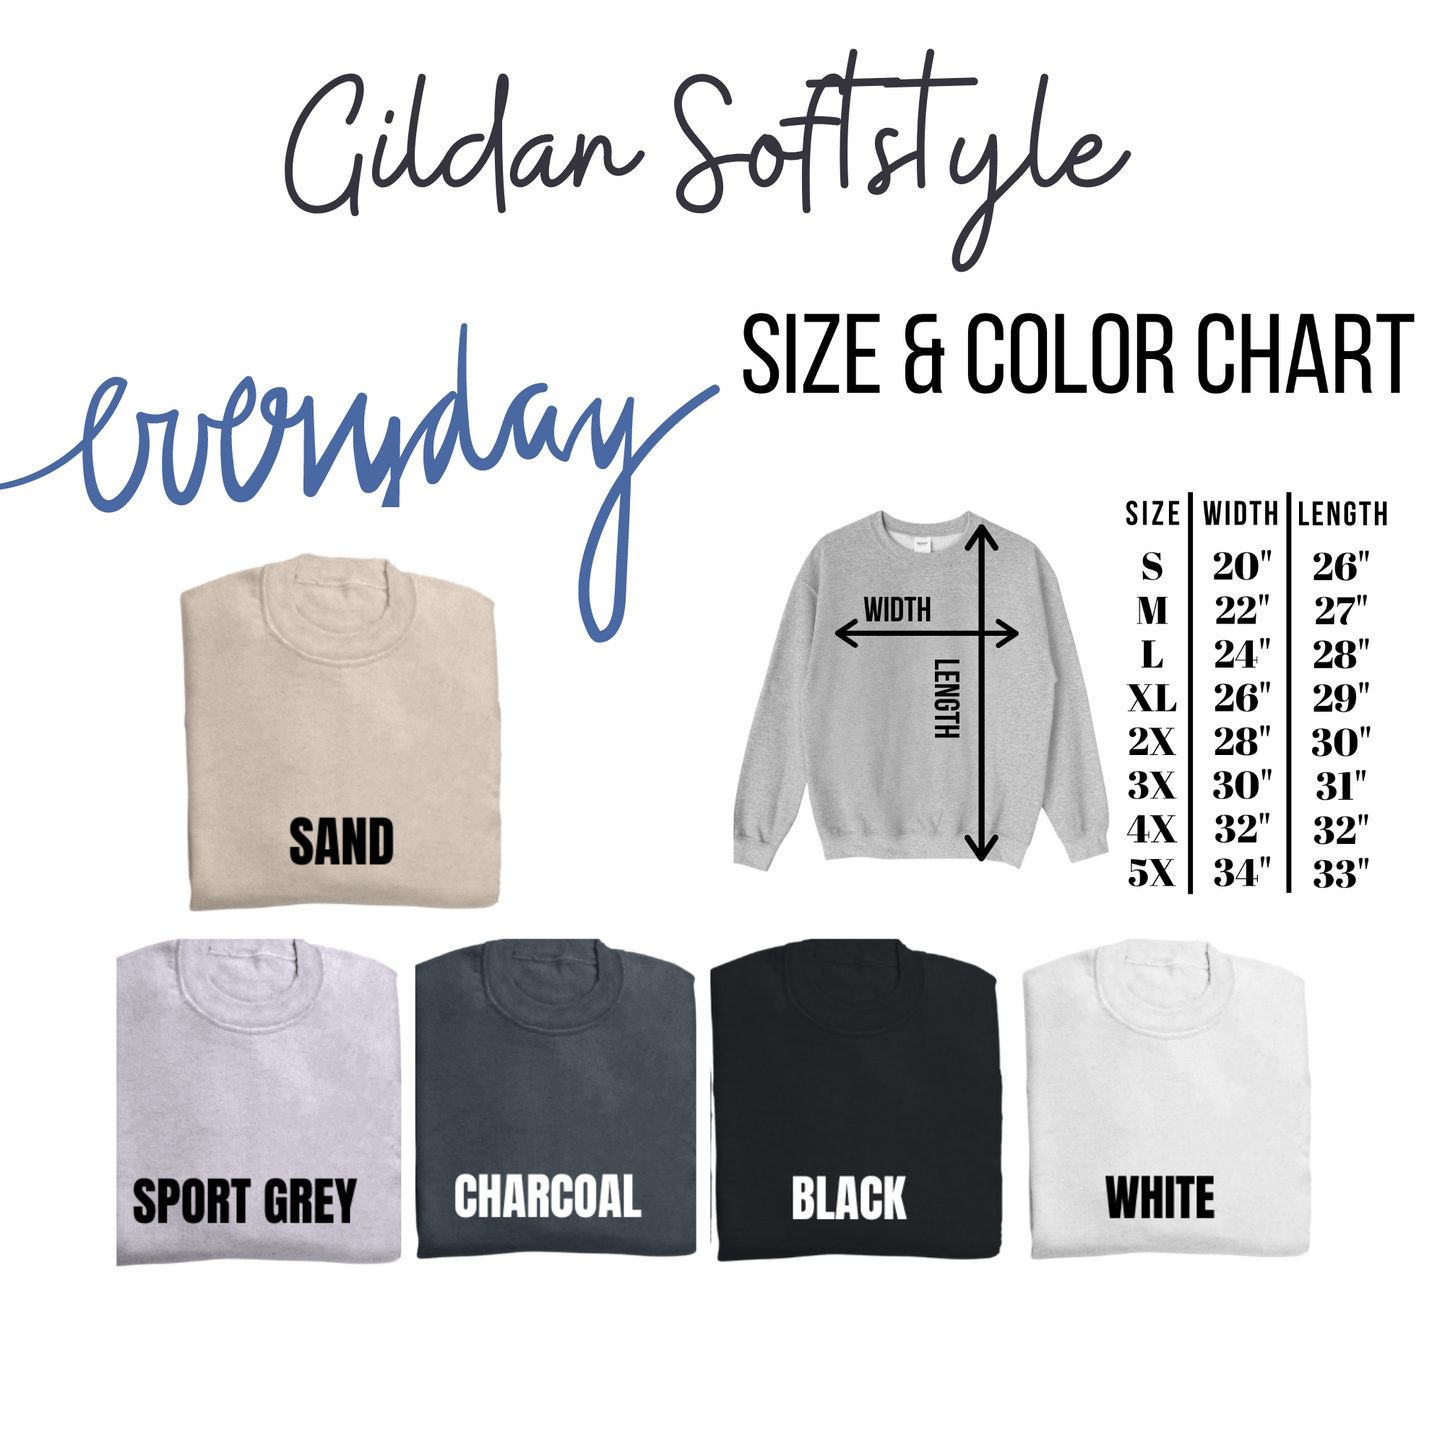 Checker Smile Glitter Effect Gildan Softstyle Tshirt or Sweatshirt